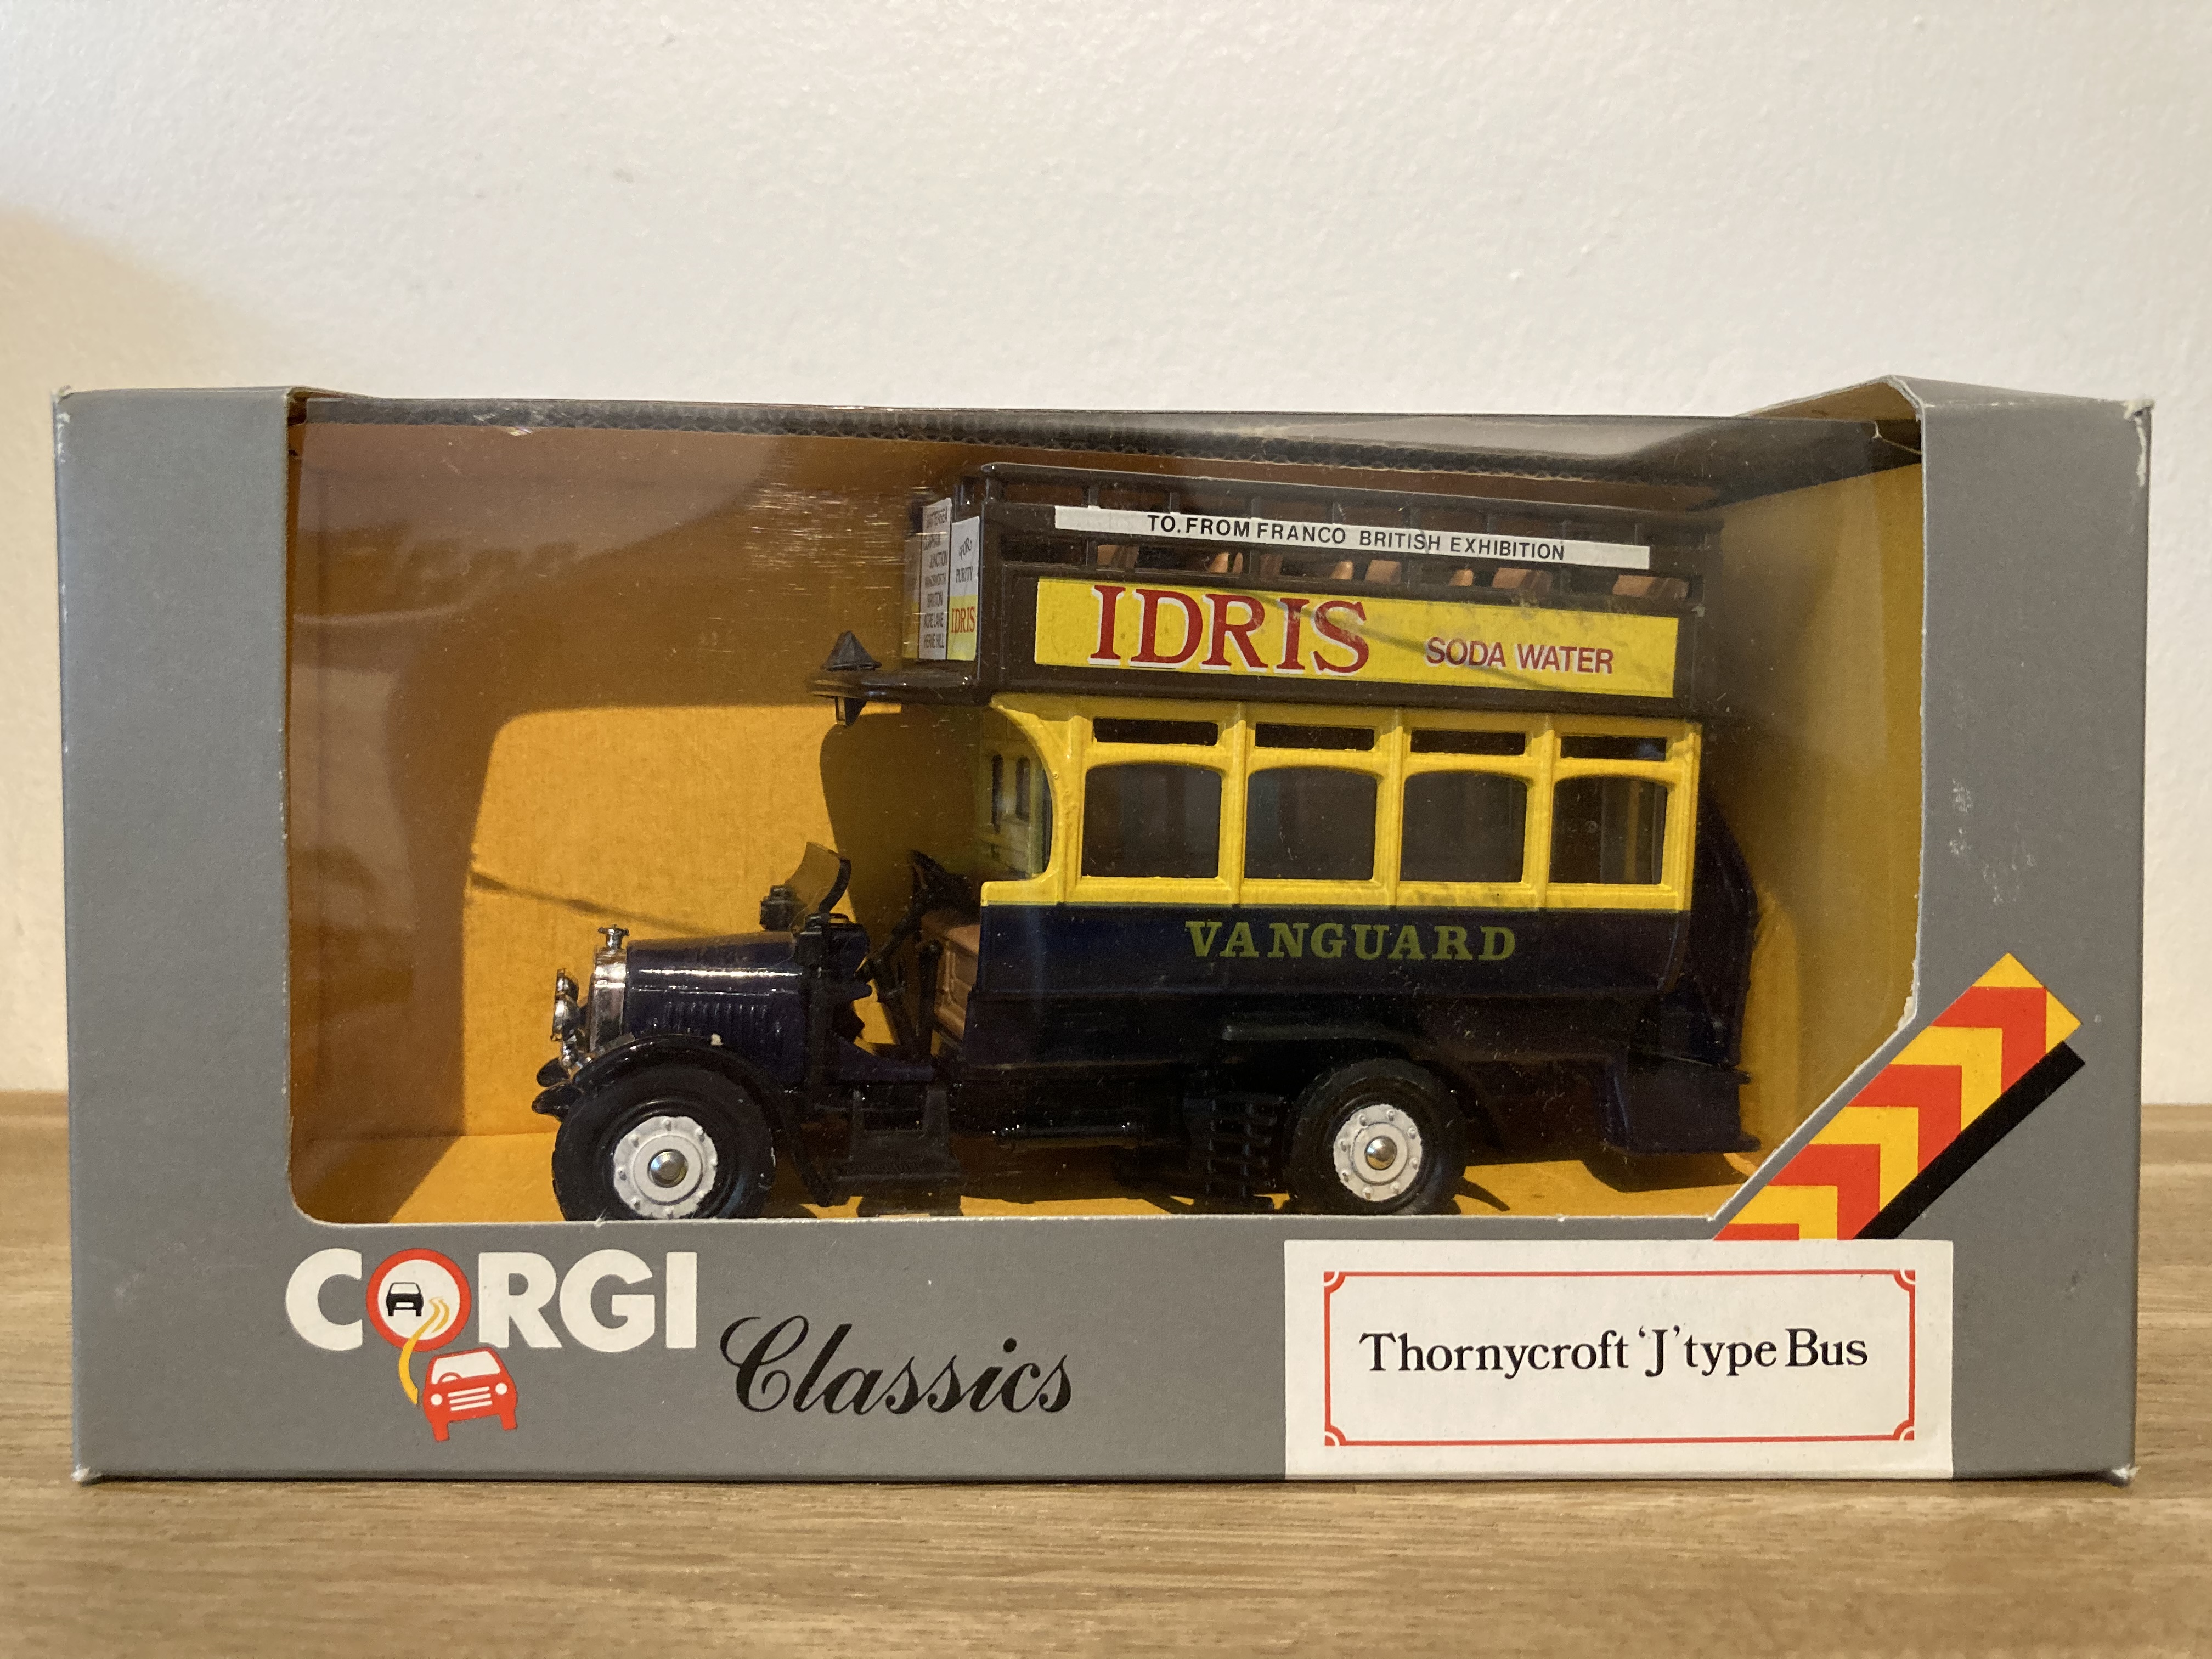 Corgi Classics Idris Soda Water, Thornycroft 'J' Type Bus - Image 2 of 4